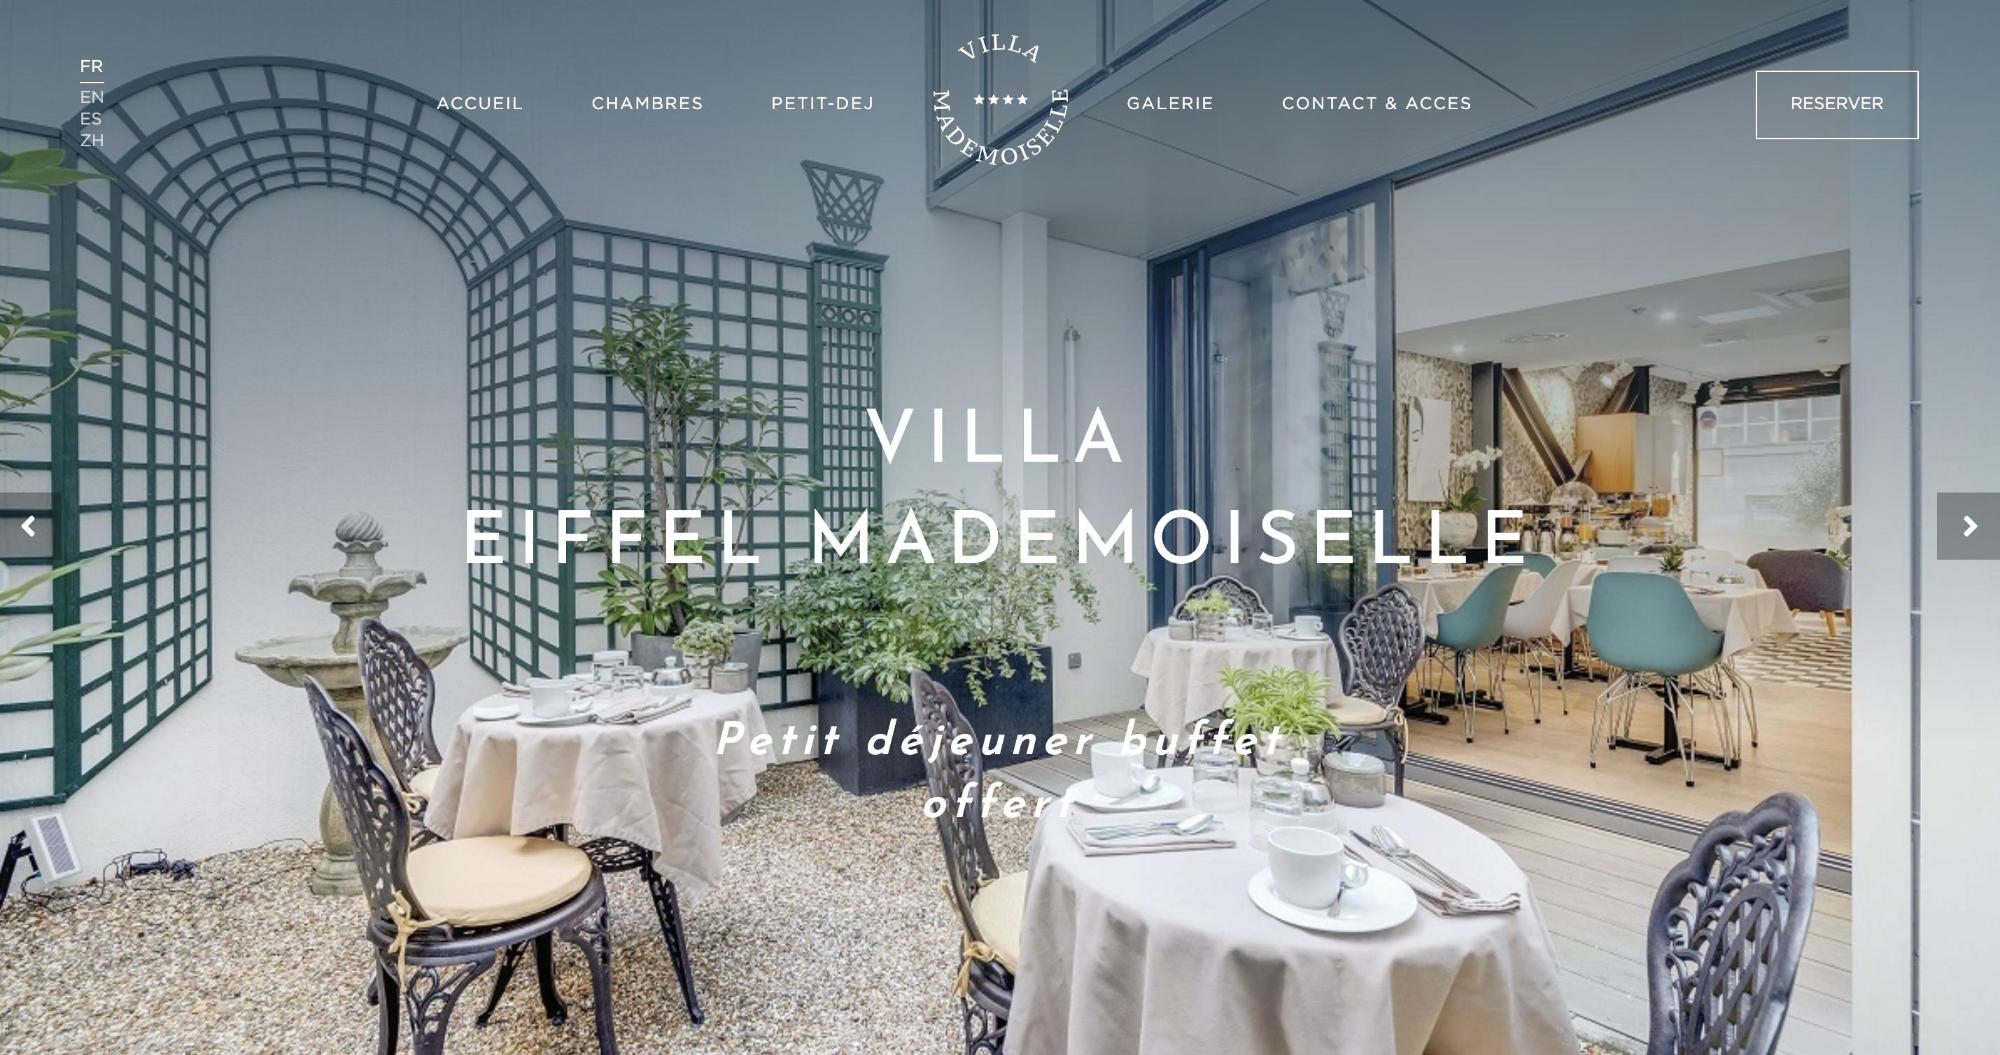 Agence MMCréation | Portfolio Villa Eiffel Mademoiselle